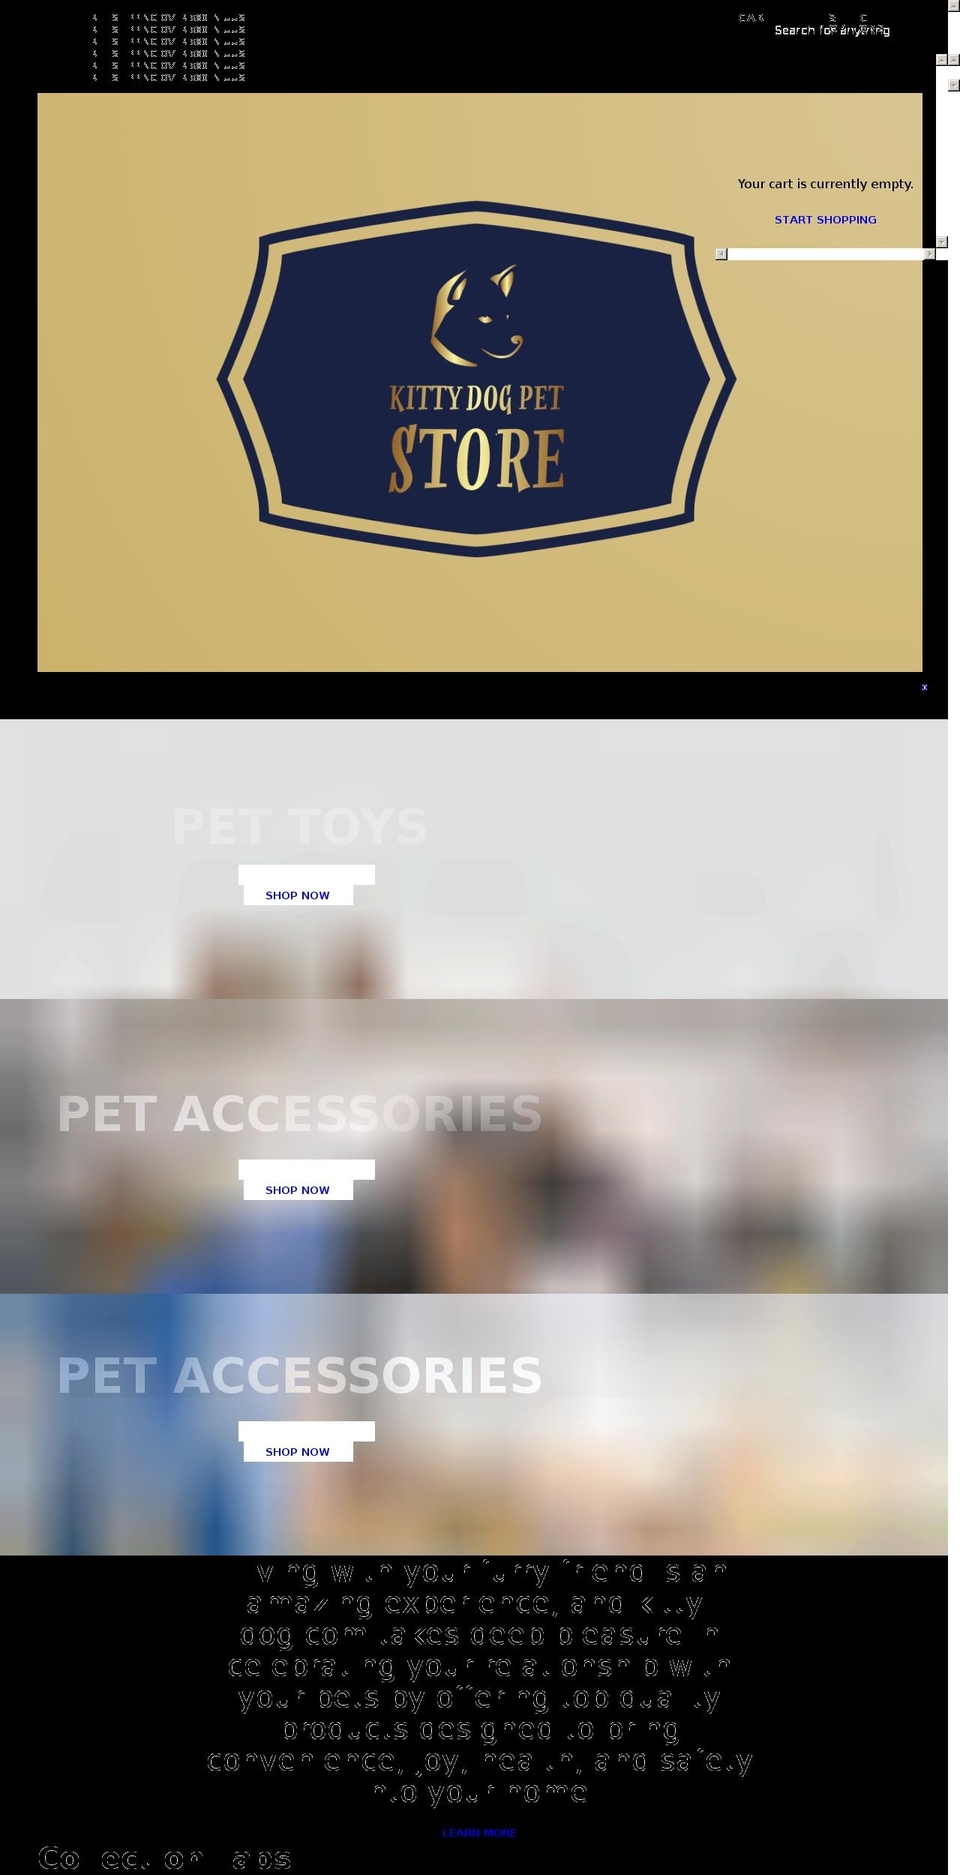 kitty-dog.com shopify website screenshot